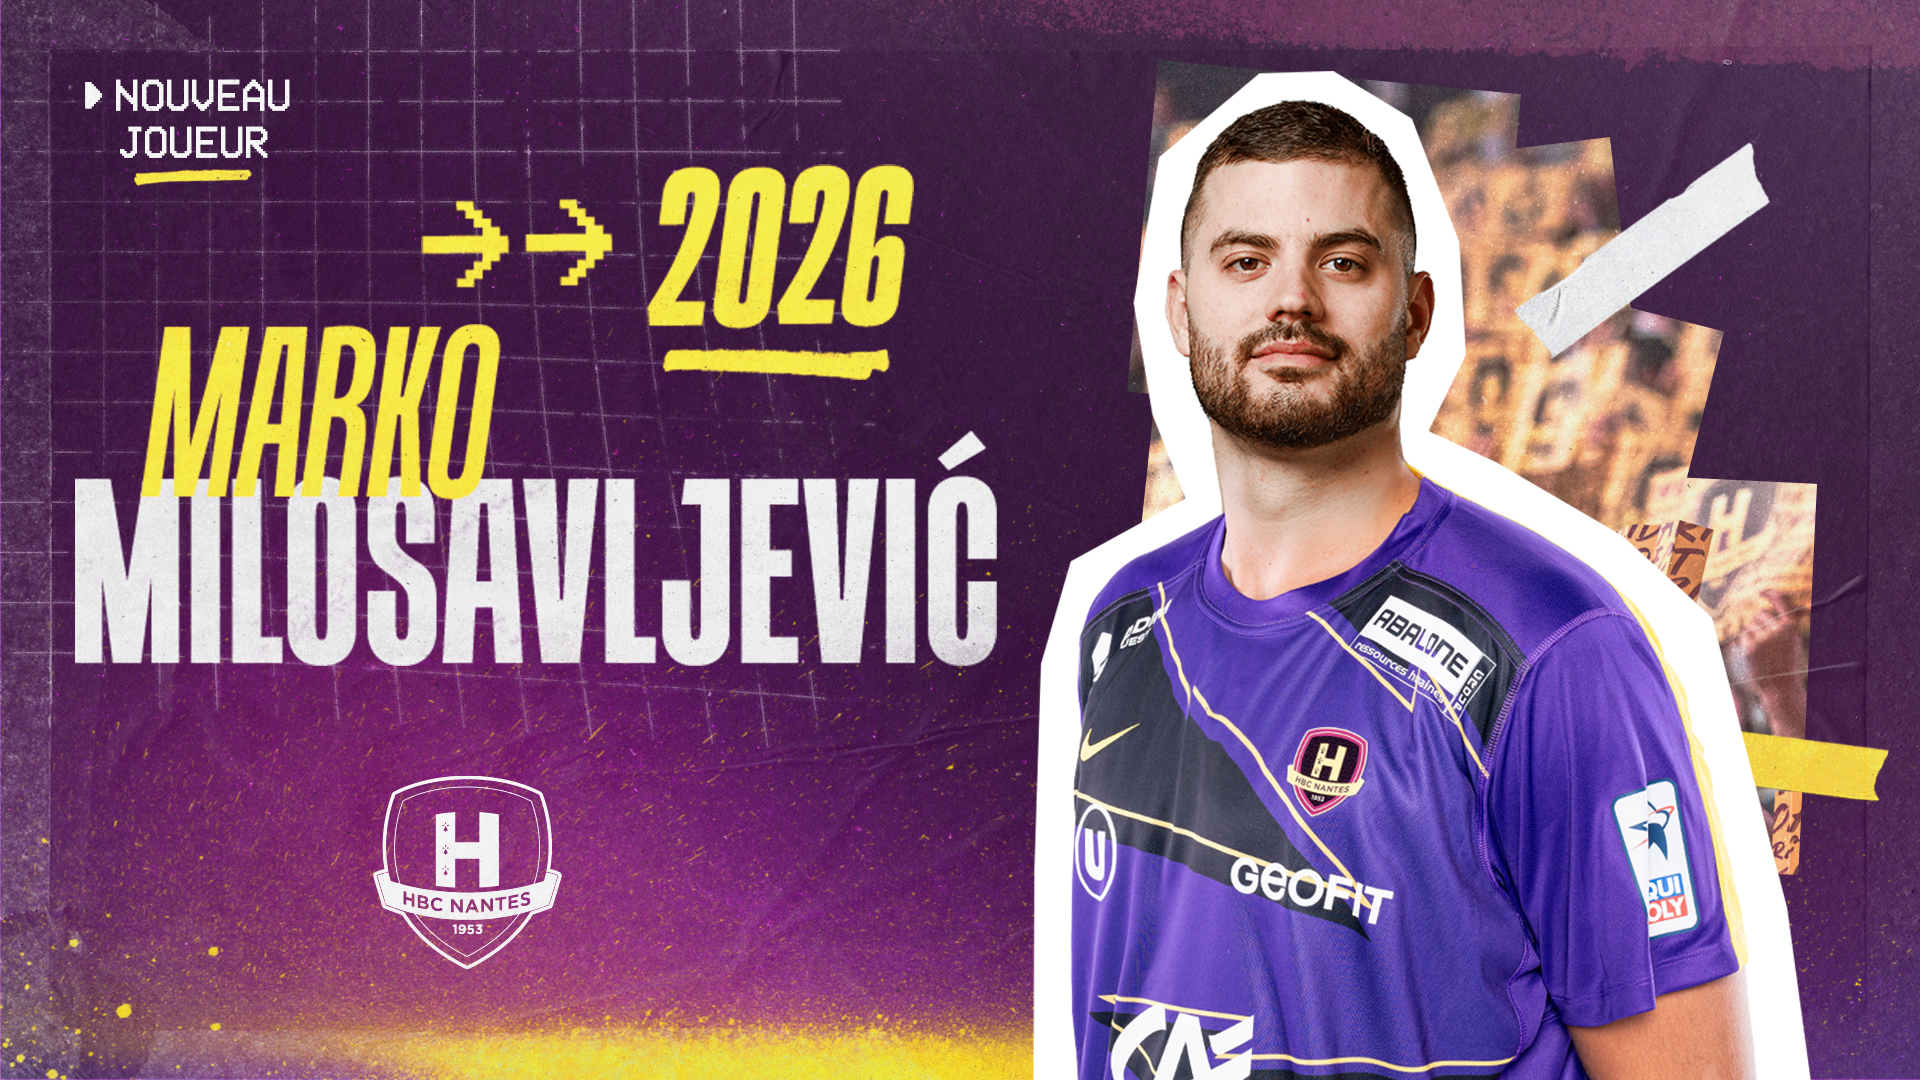 Marko Milosavljevic au HBC Nantes en joker et jusqu'en 2026